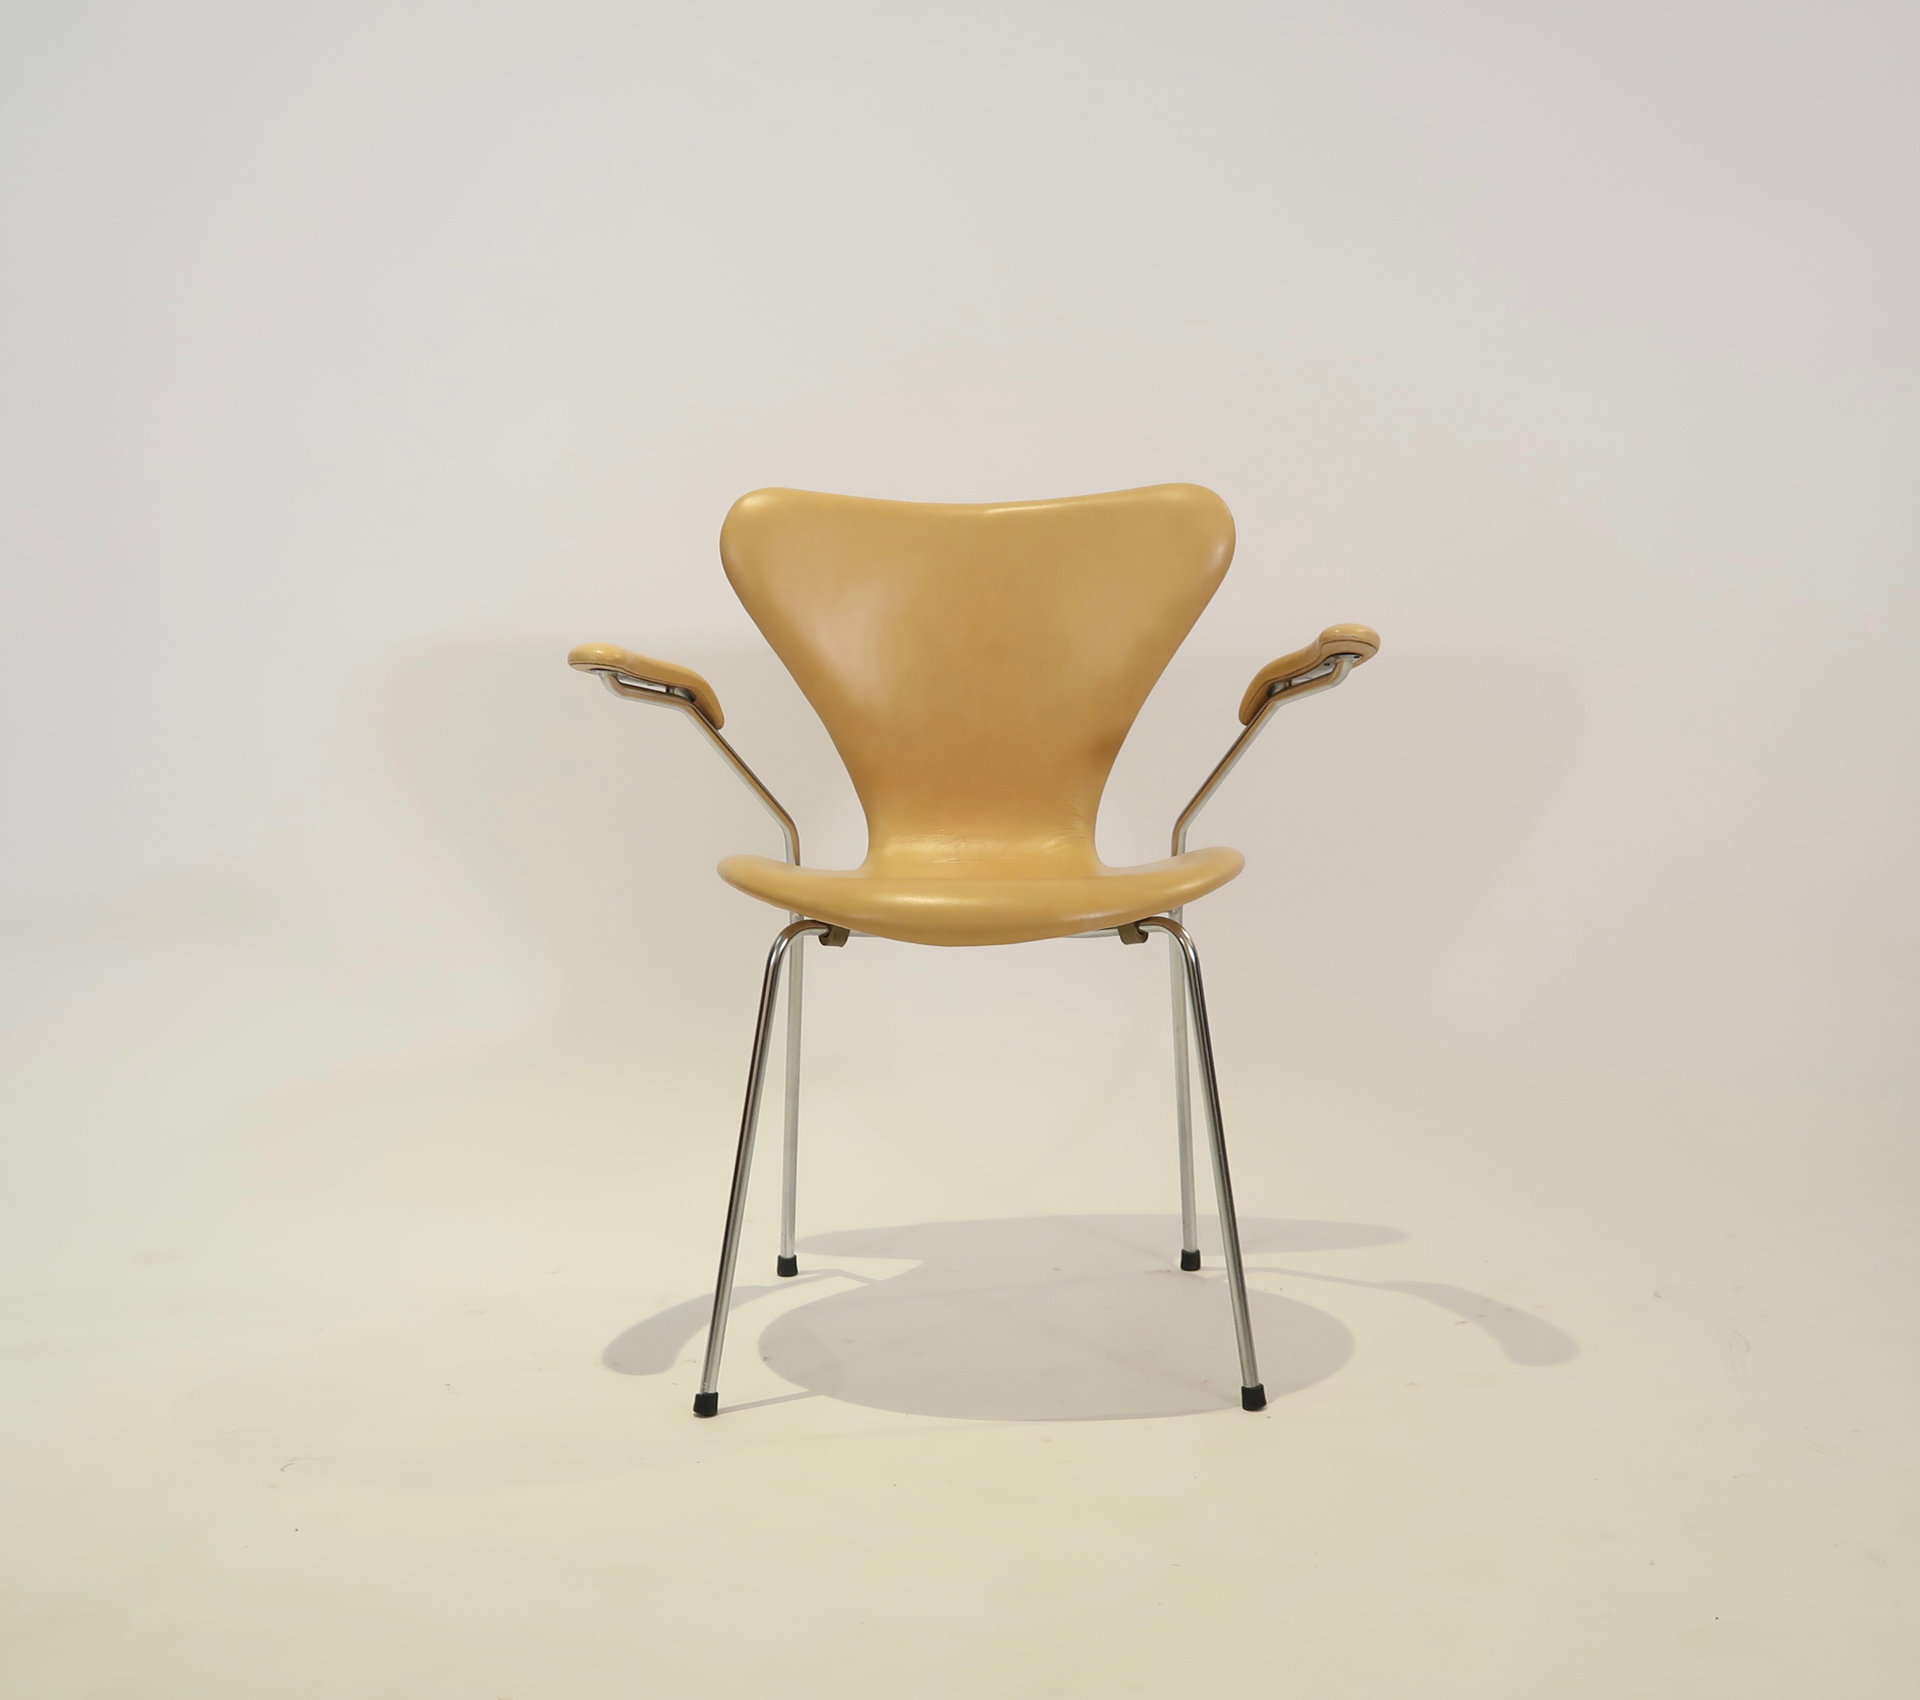 Arne Jacobsen, chaise 3207 en cuir